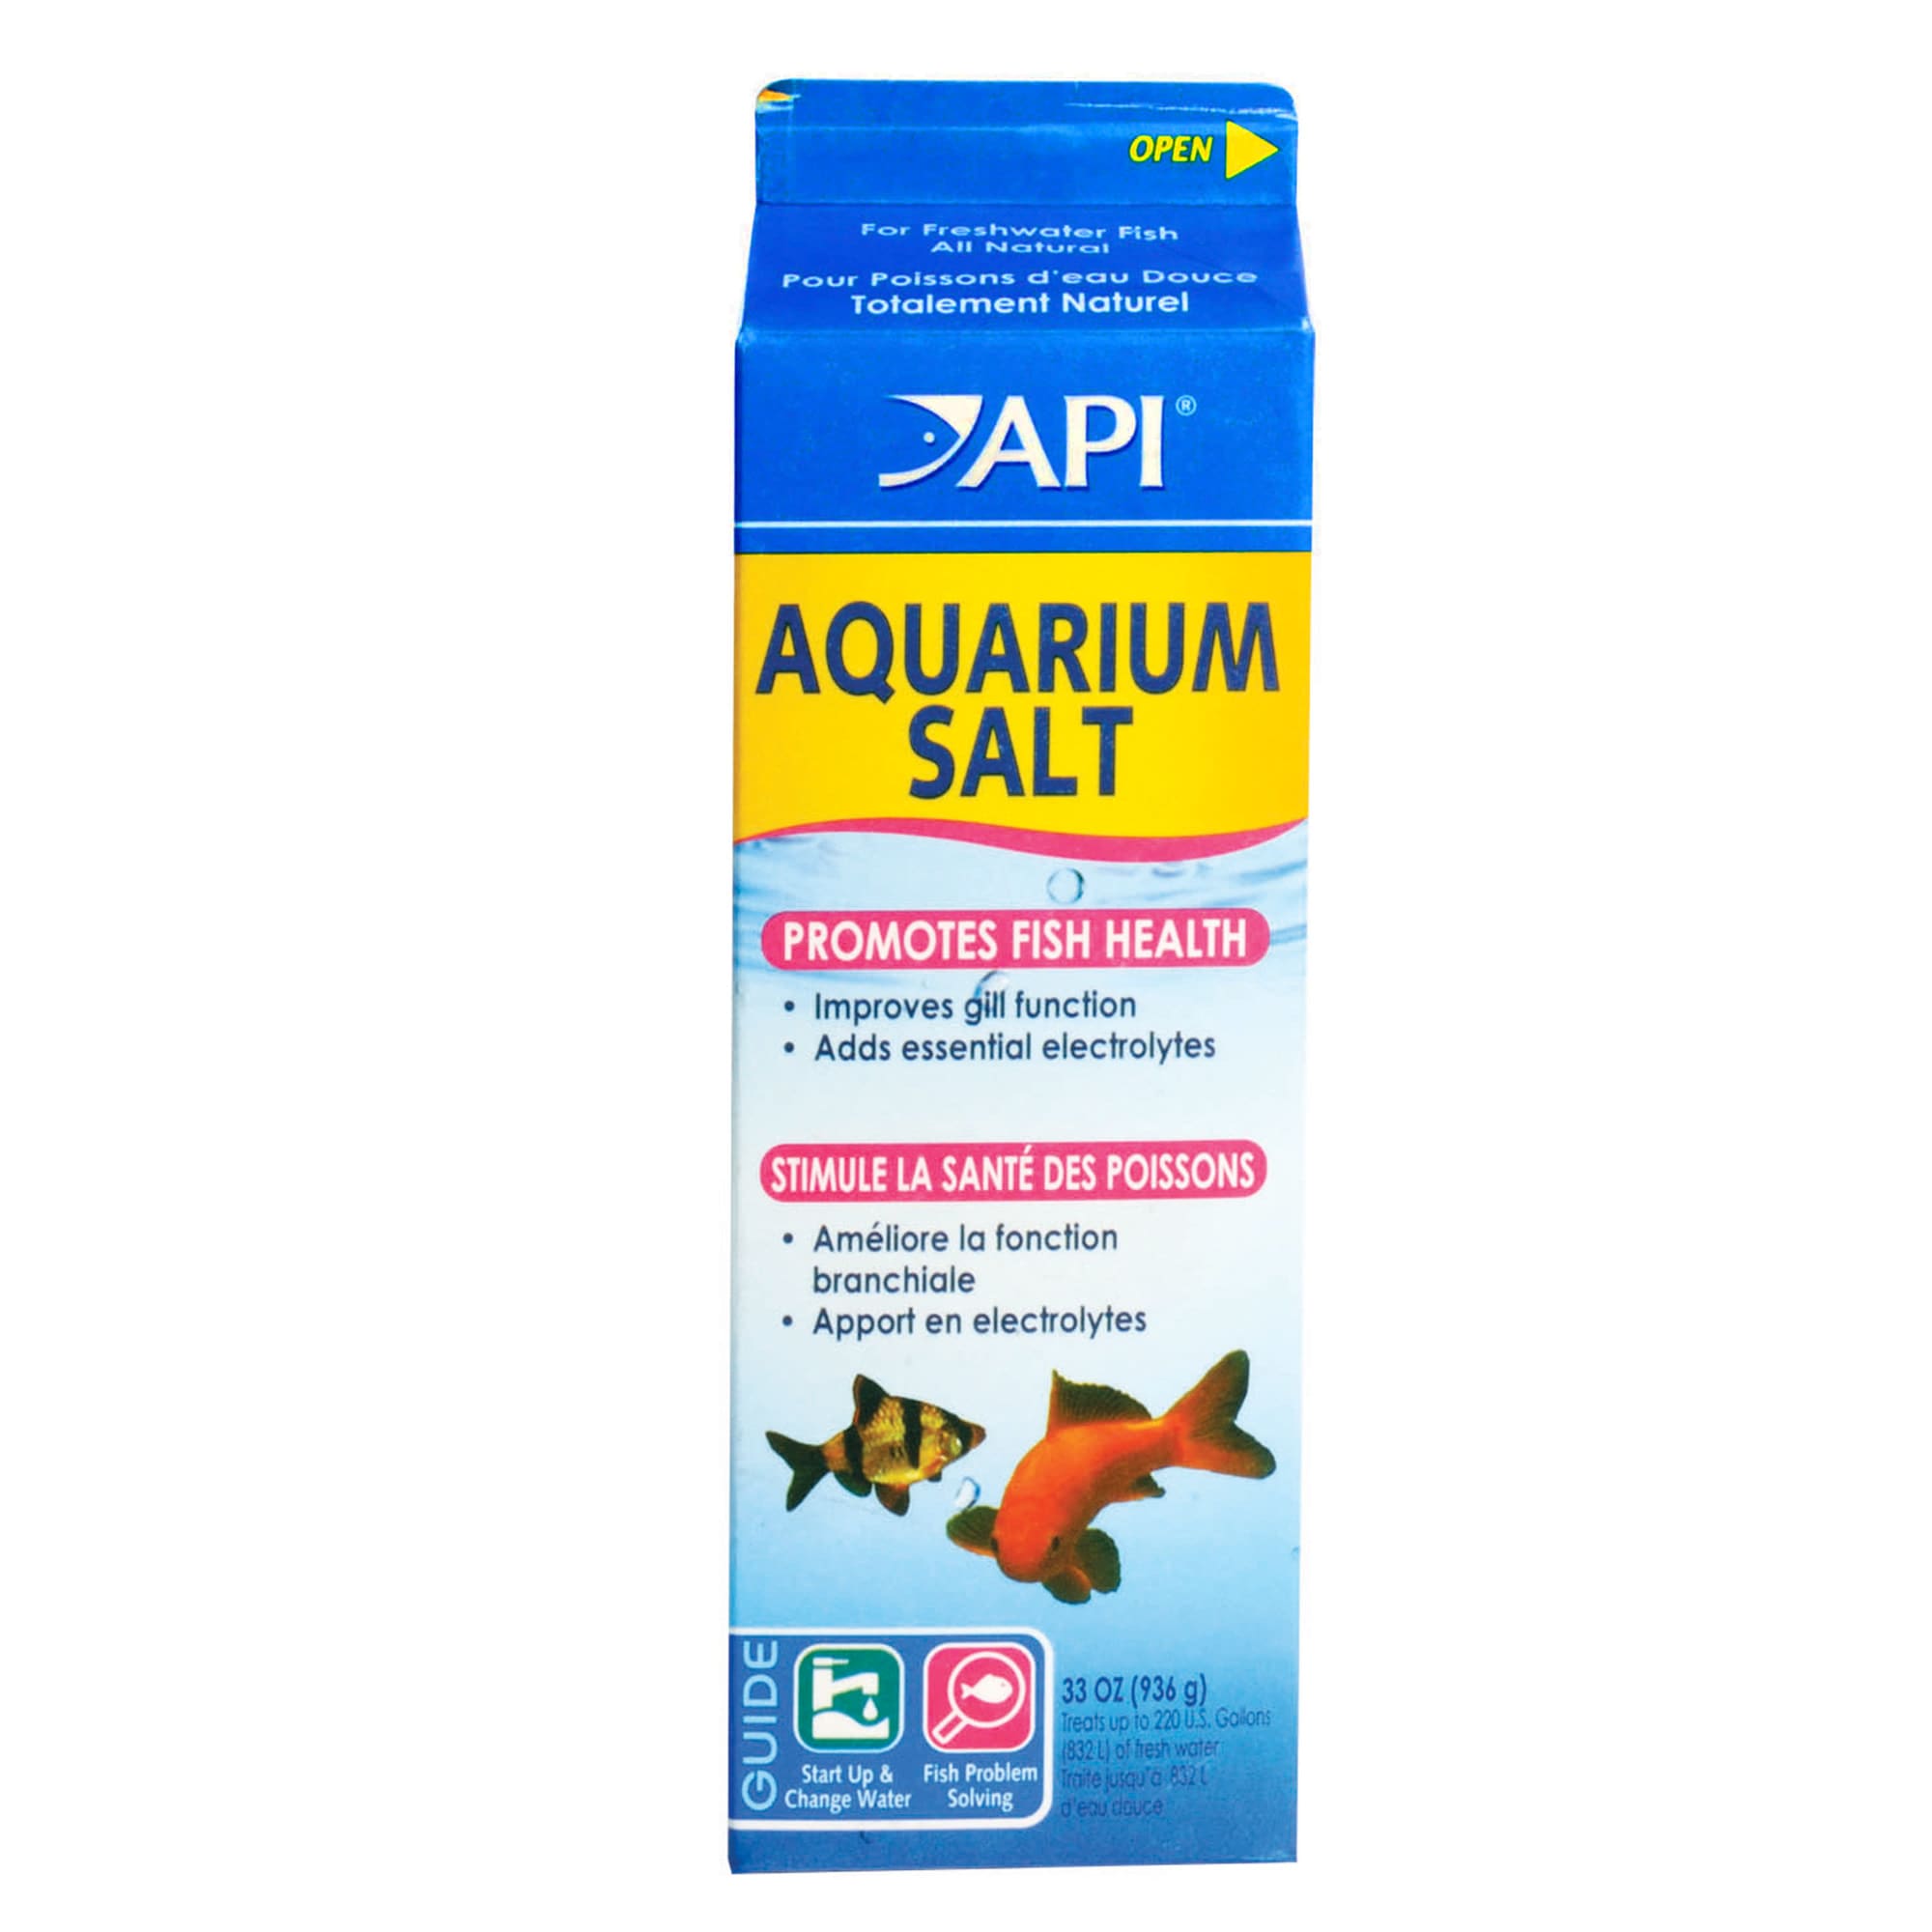 Aquarium Epsom Salt Dosage  : Essential Guidelines for Fish Wellness